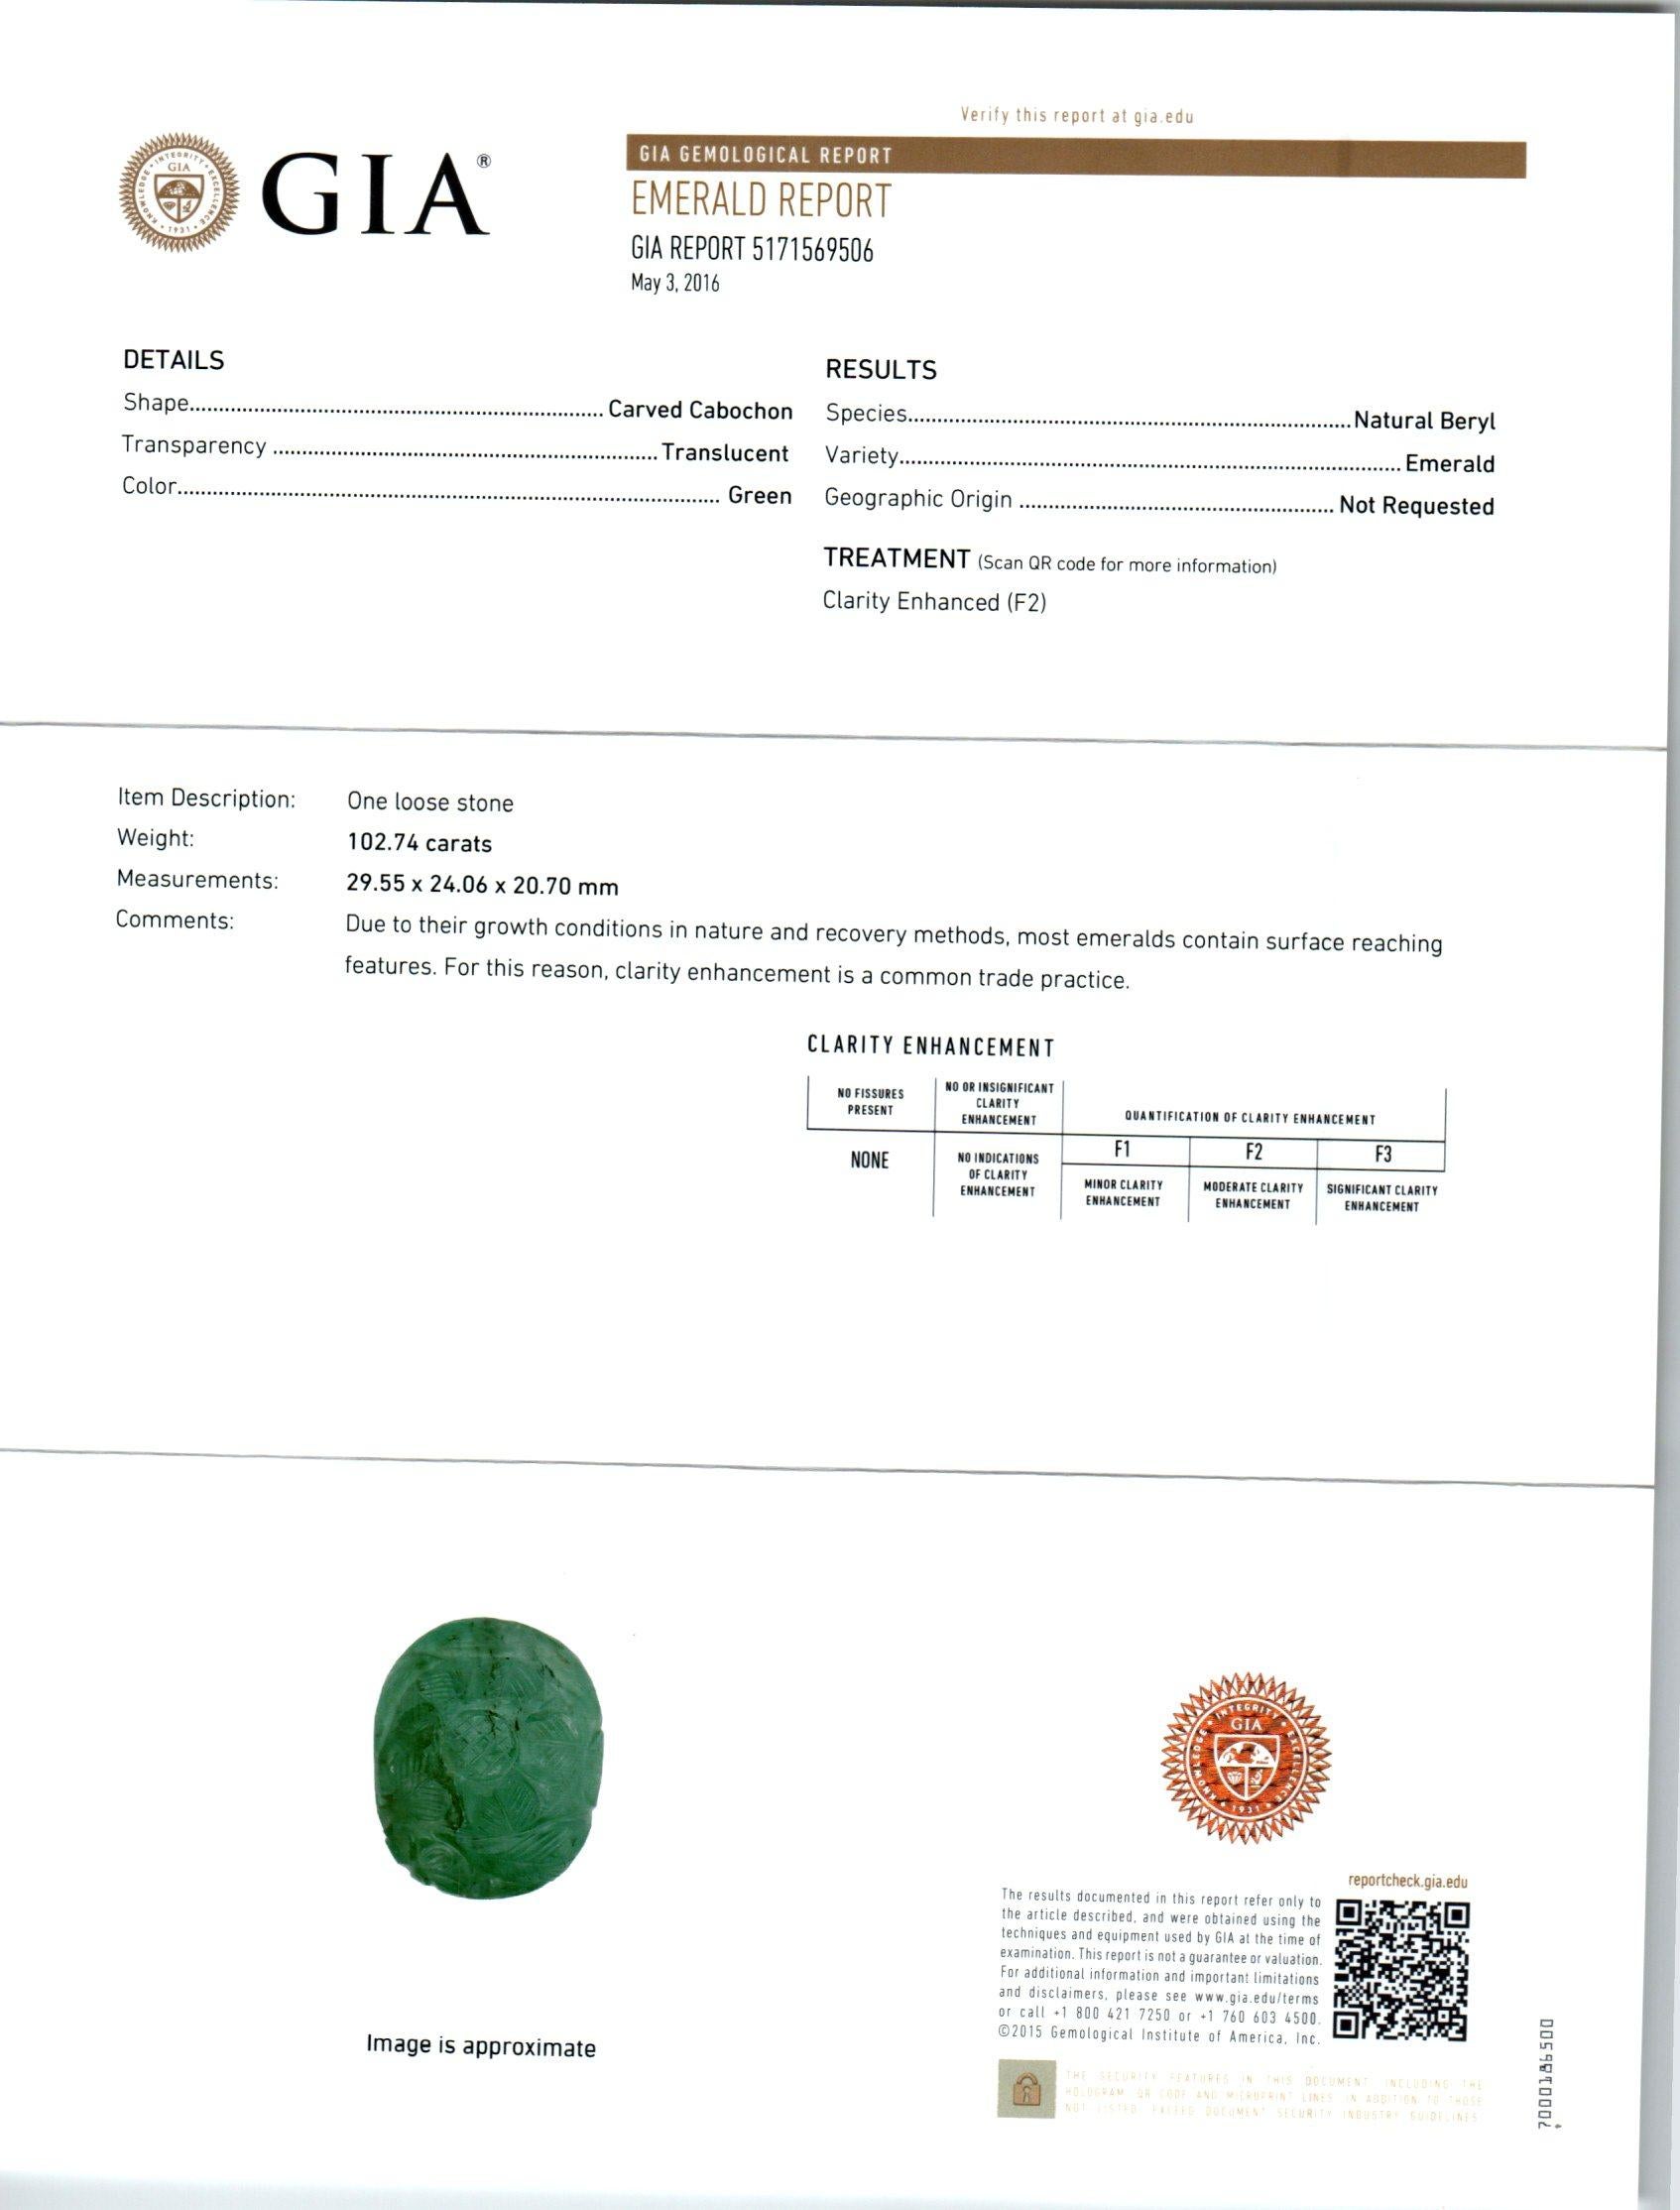 GIA Certified 102.74 Carat Carved Mogul Emerald Diamond Gold Pendant Necklace For Sale 2